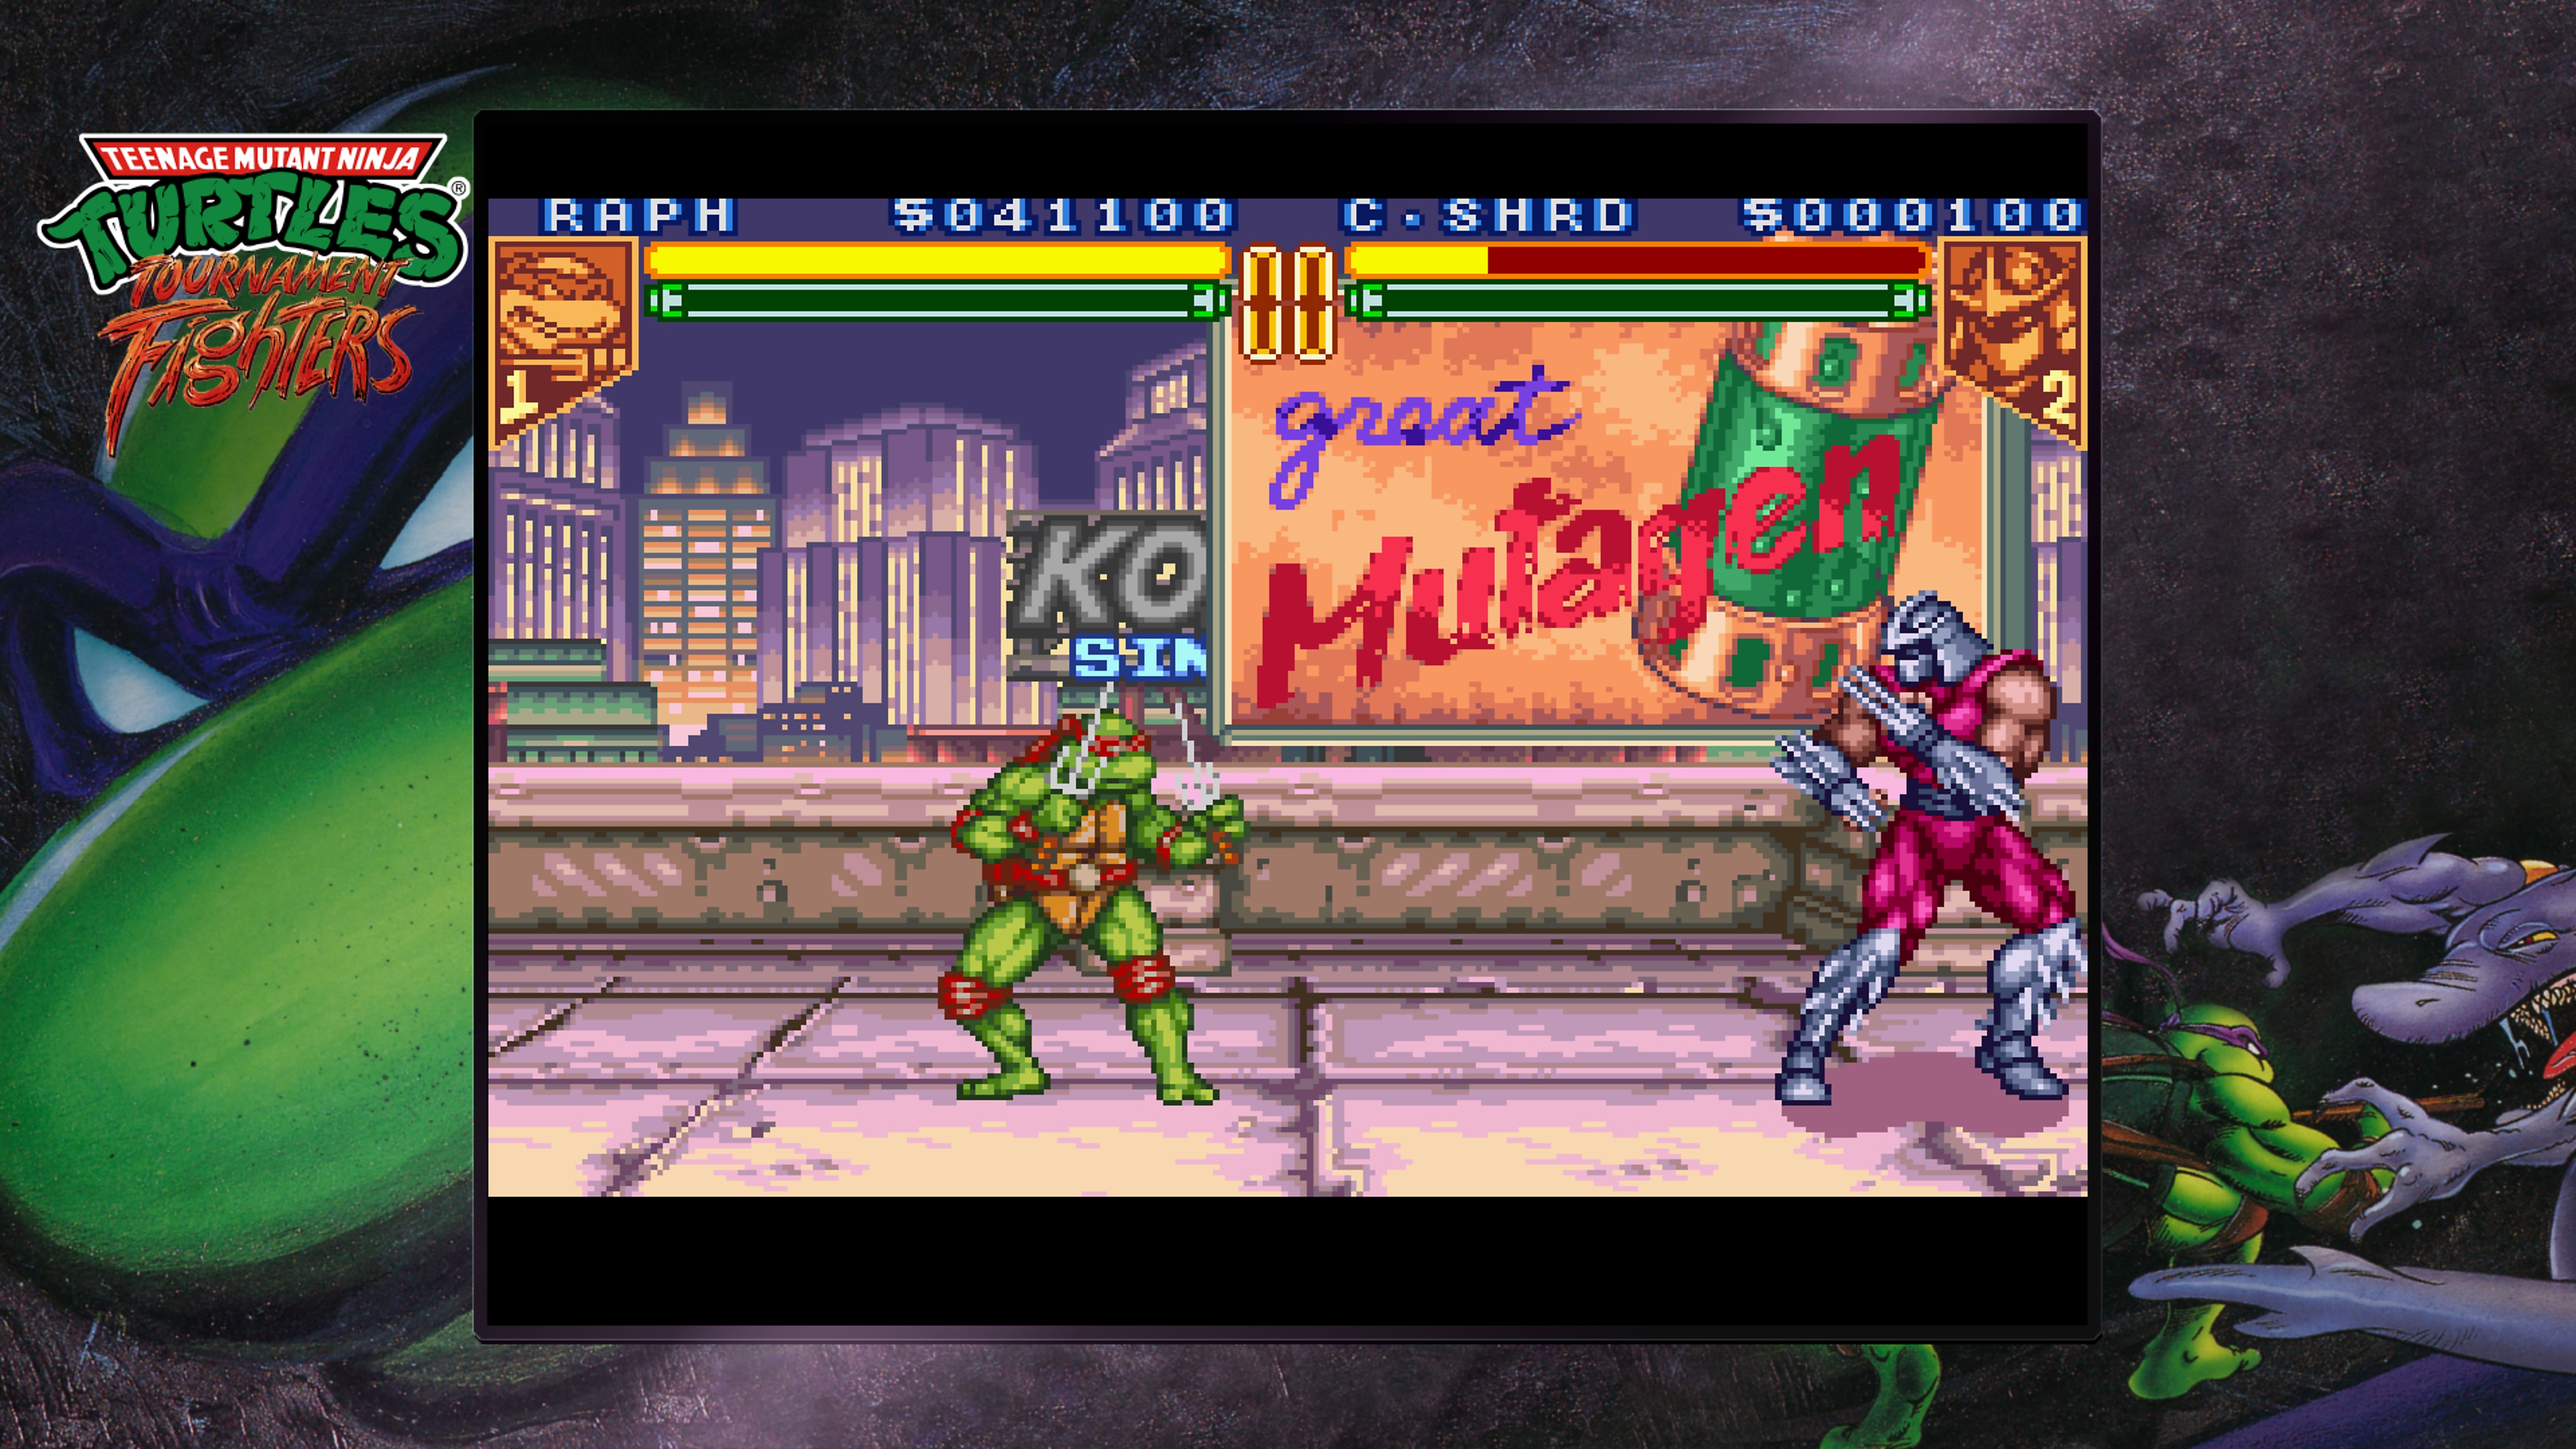 《Teenage Mutant Ninja Turtles Collection - Tournament Fighters》螢幕截圖，呈現拉斐爾與許瑞德在屋頂打鬥的景況